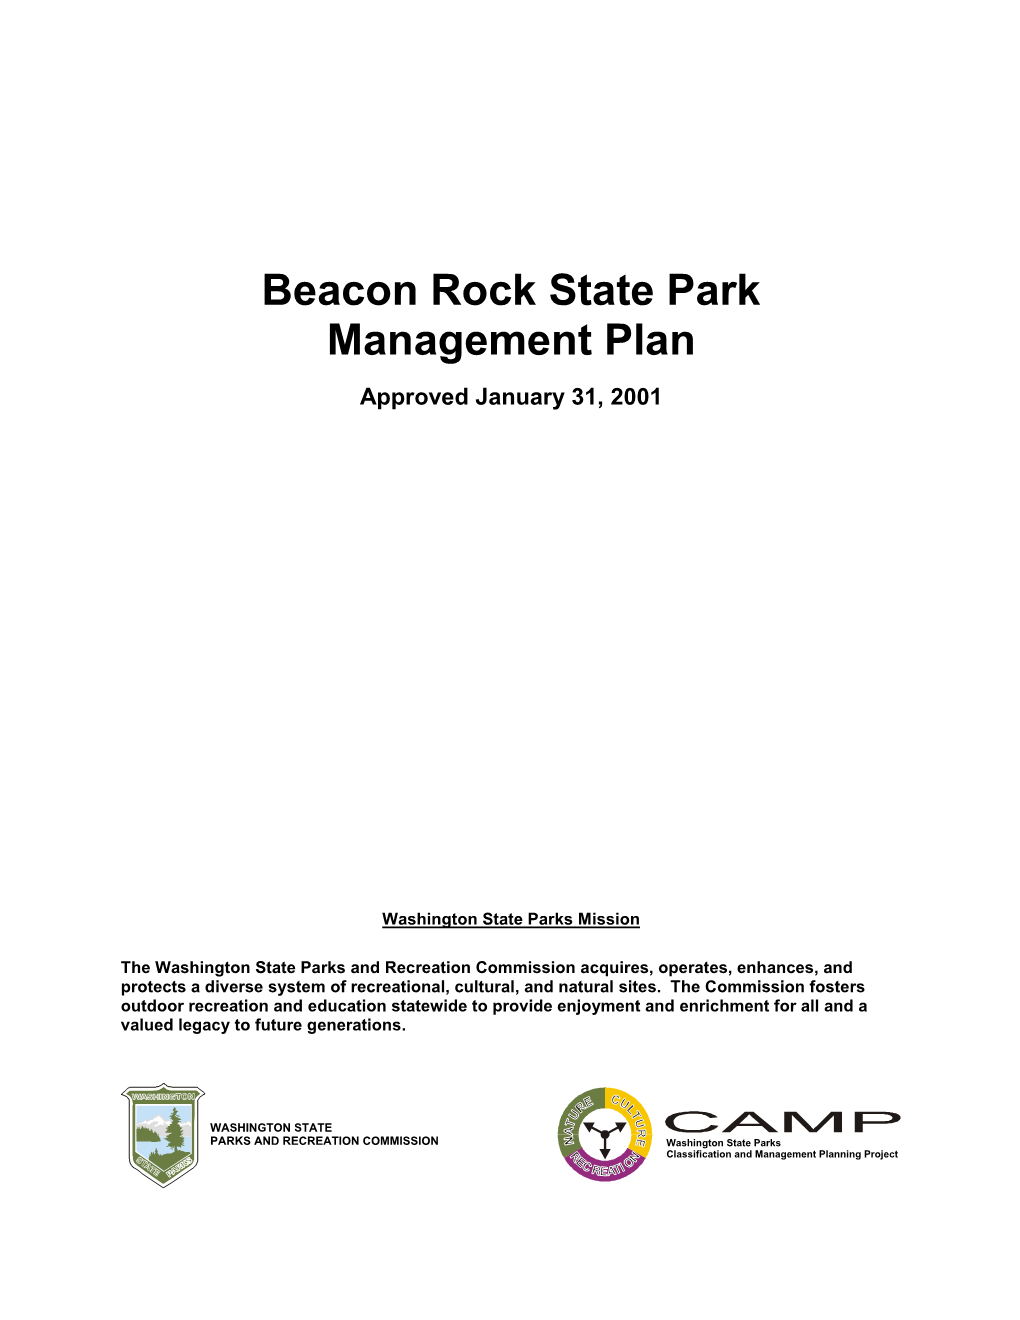 Beacon Rock State Park Management Plan